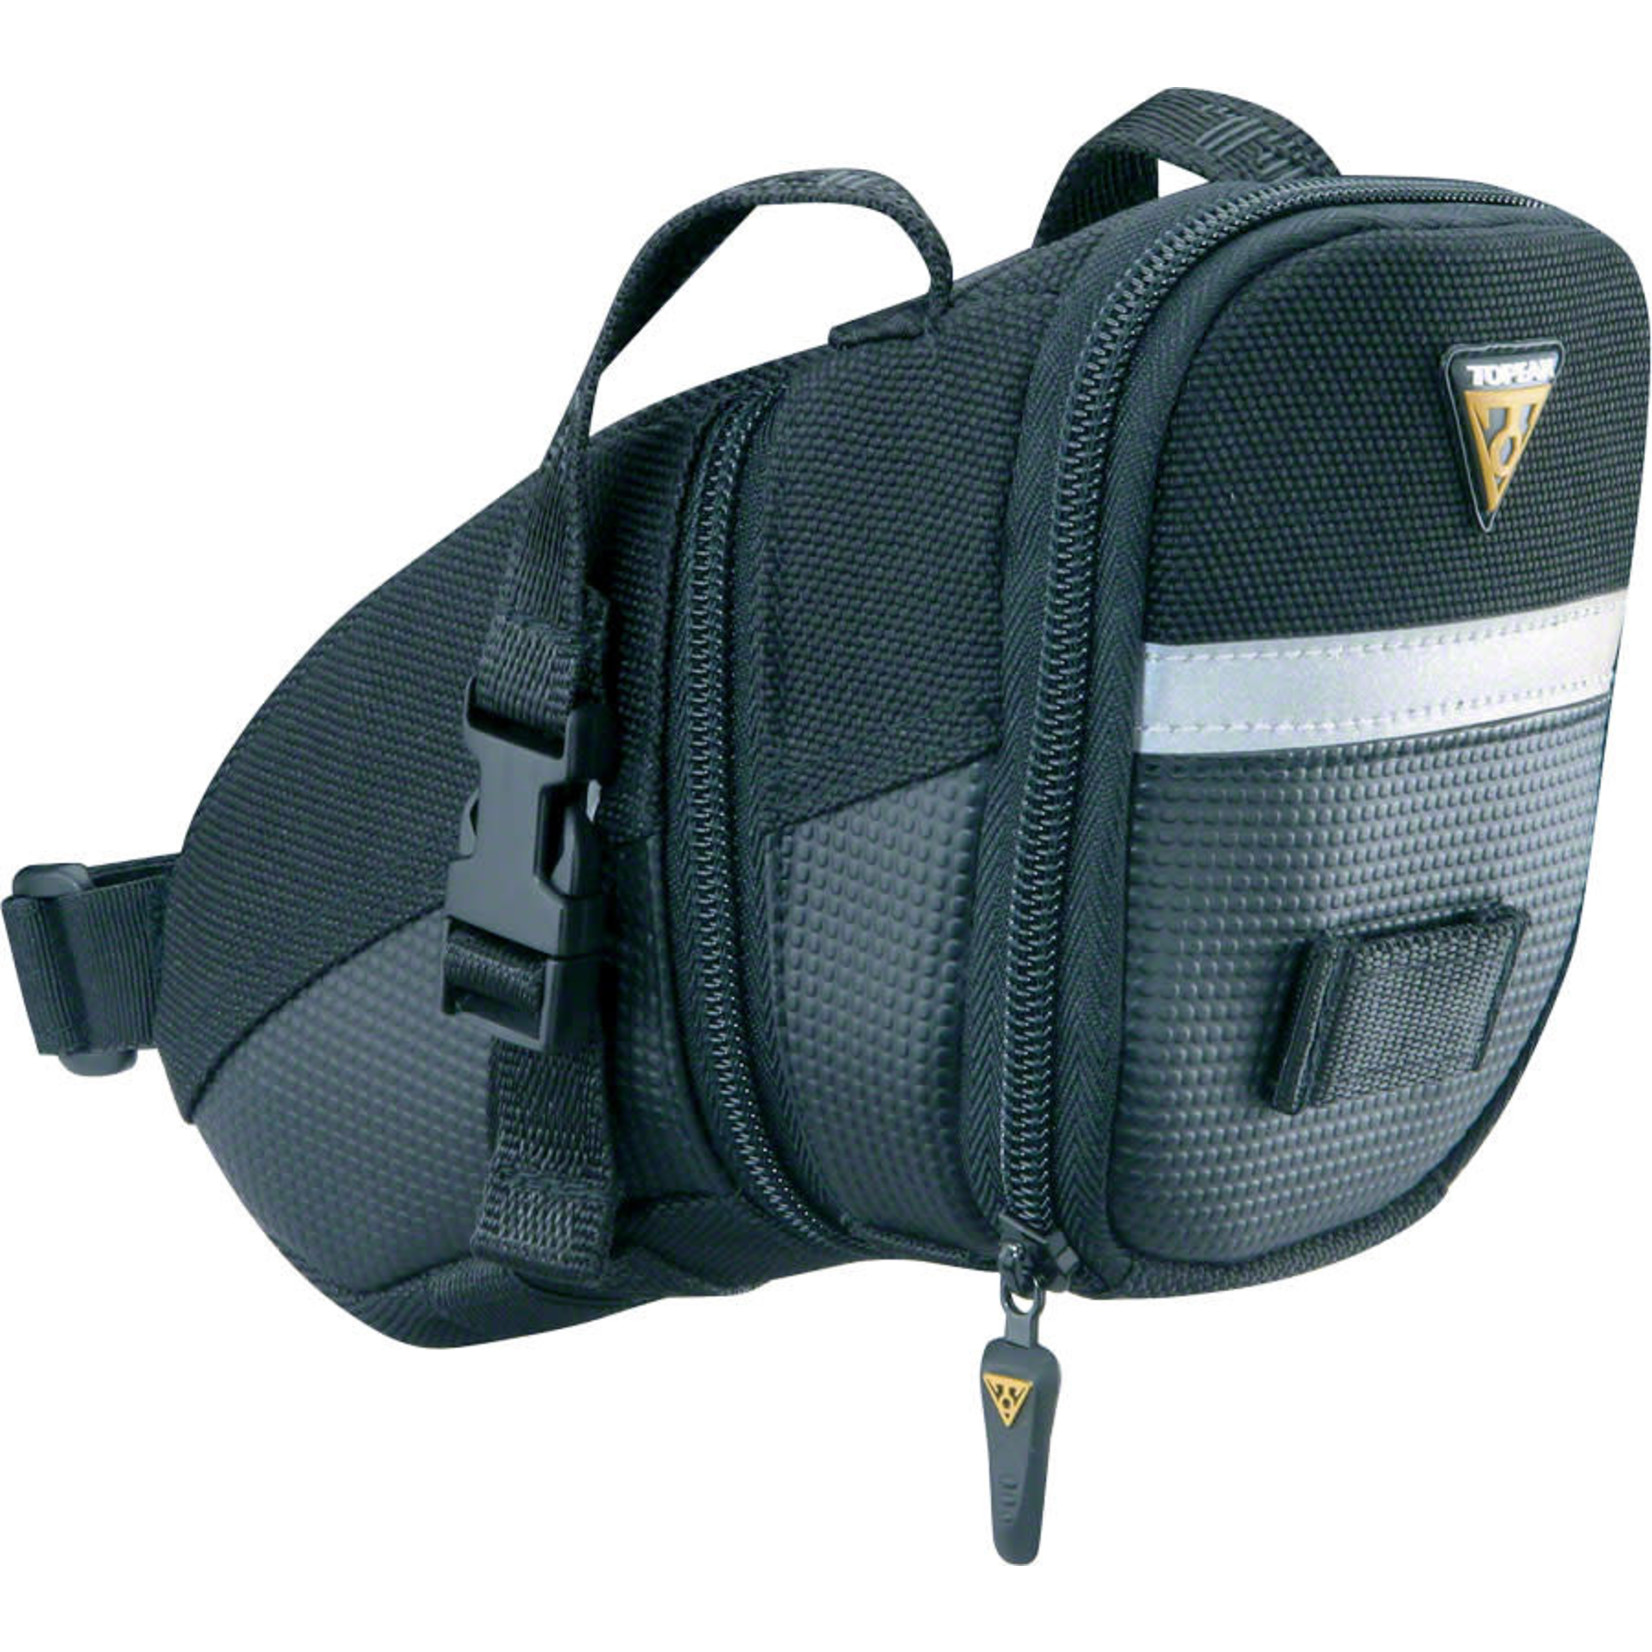 Topeak Aero Wedge Seat Bag - Strap-on, Medium, Black